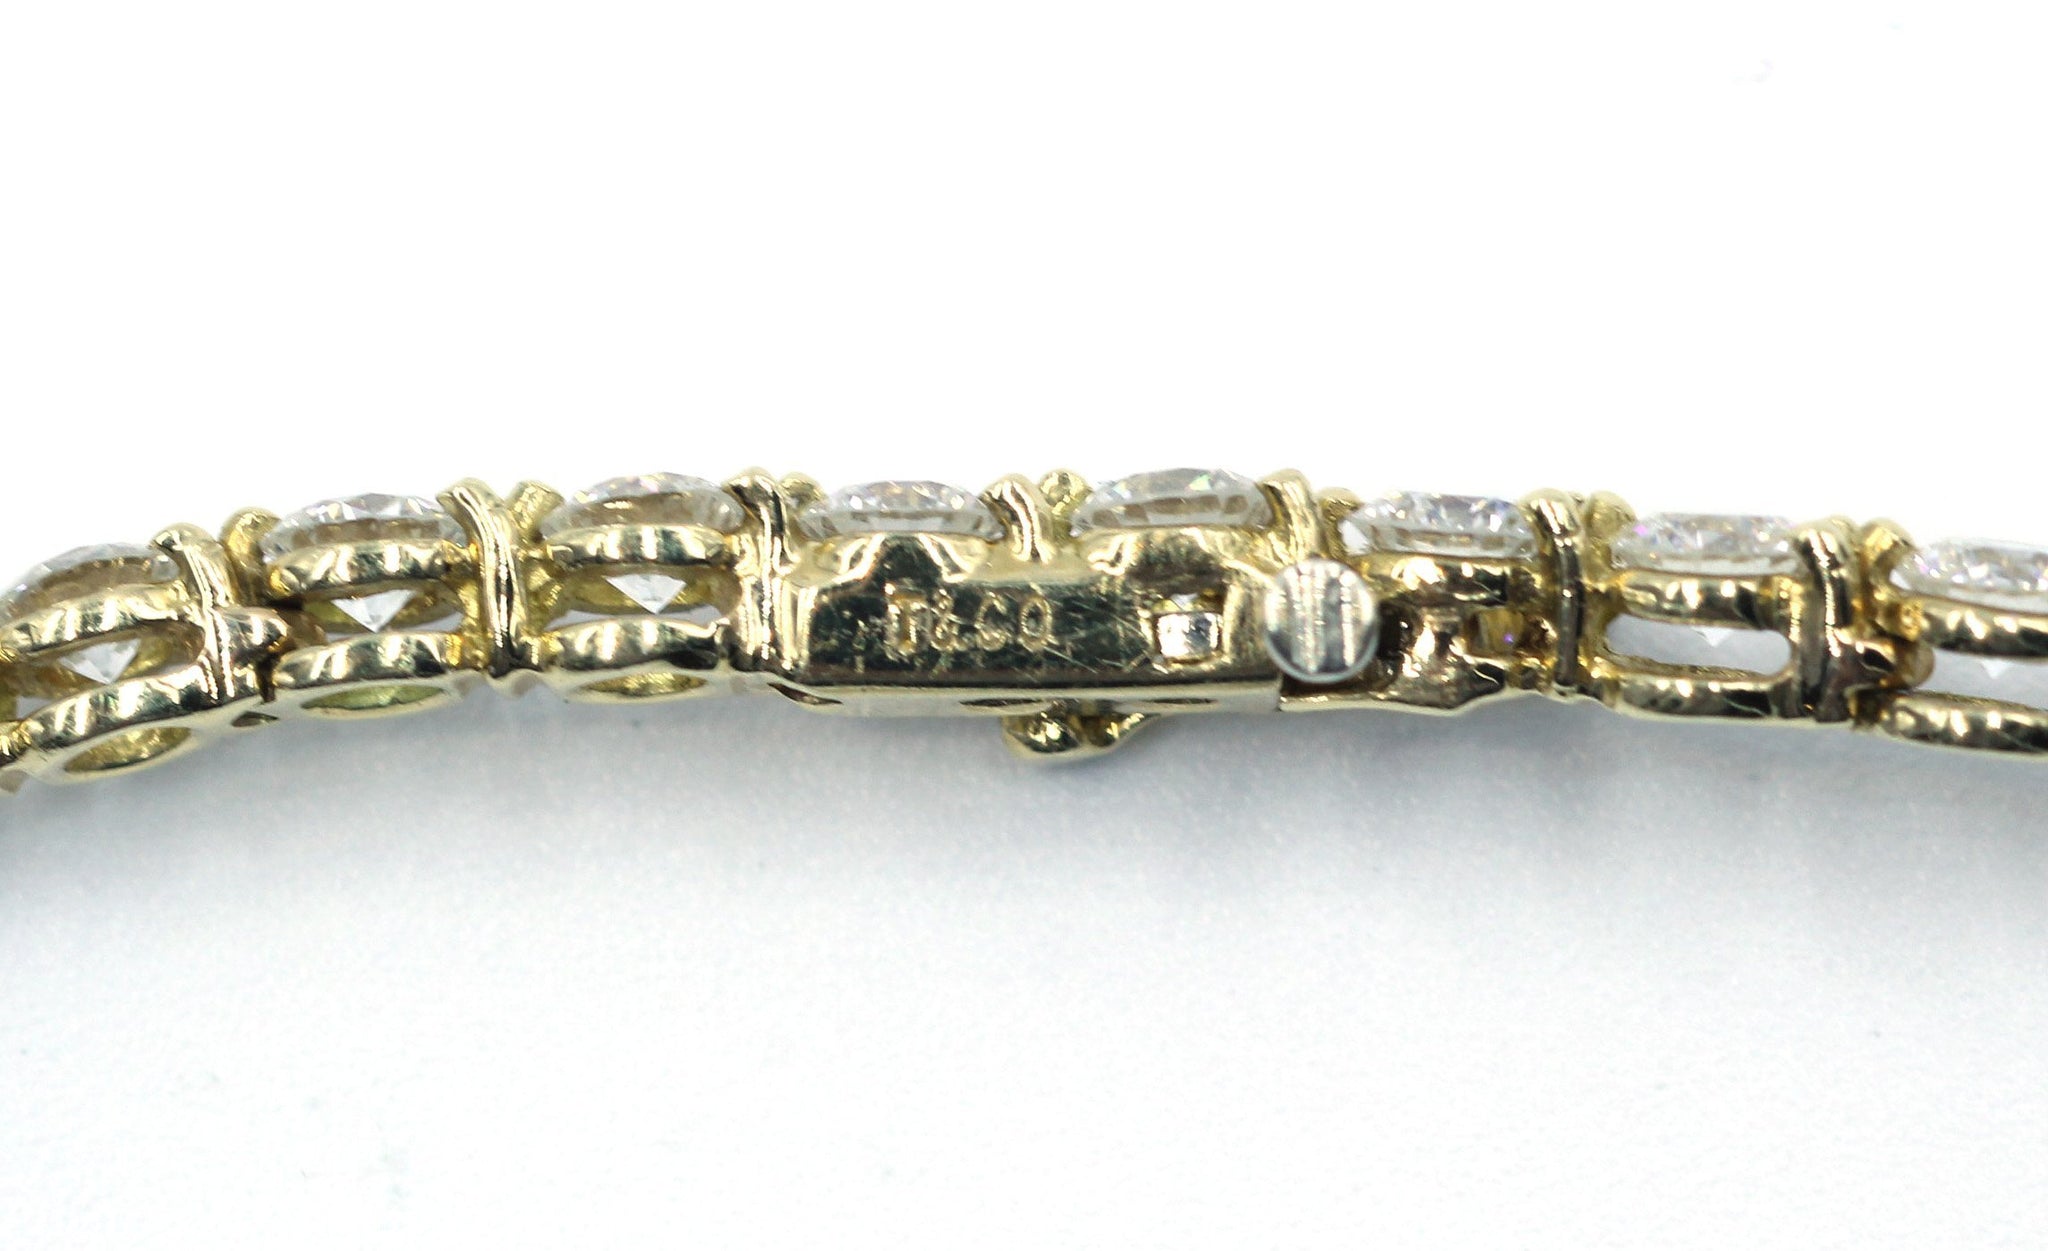 Vintage Tiffany Diamond Necklace, SOLD